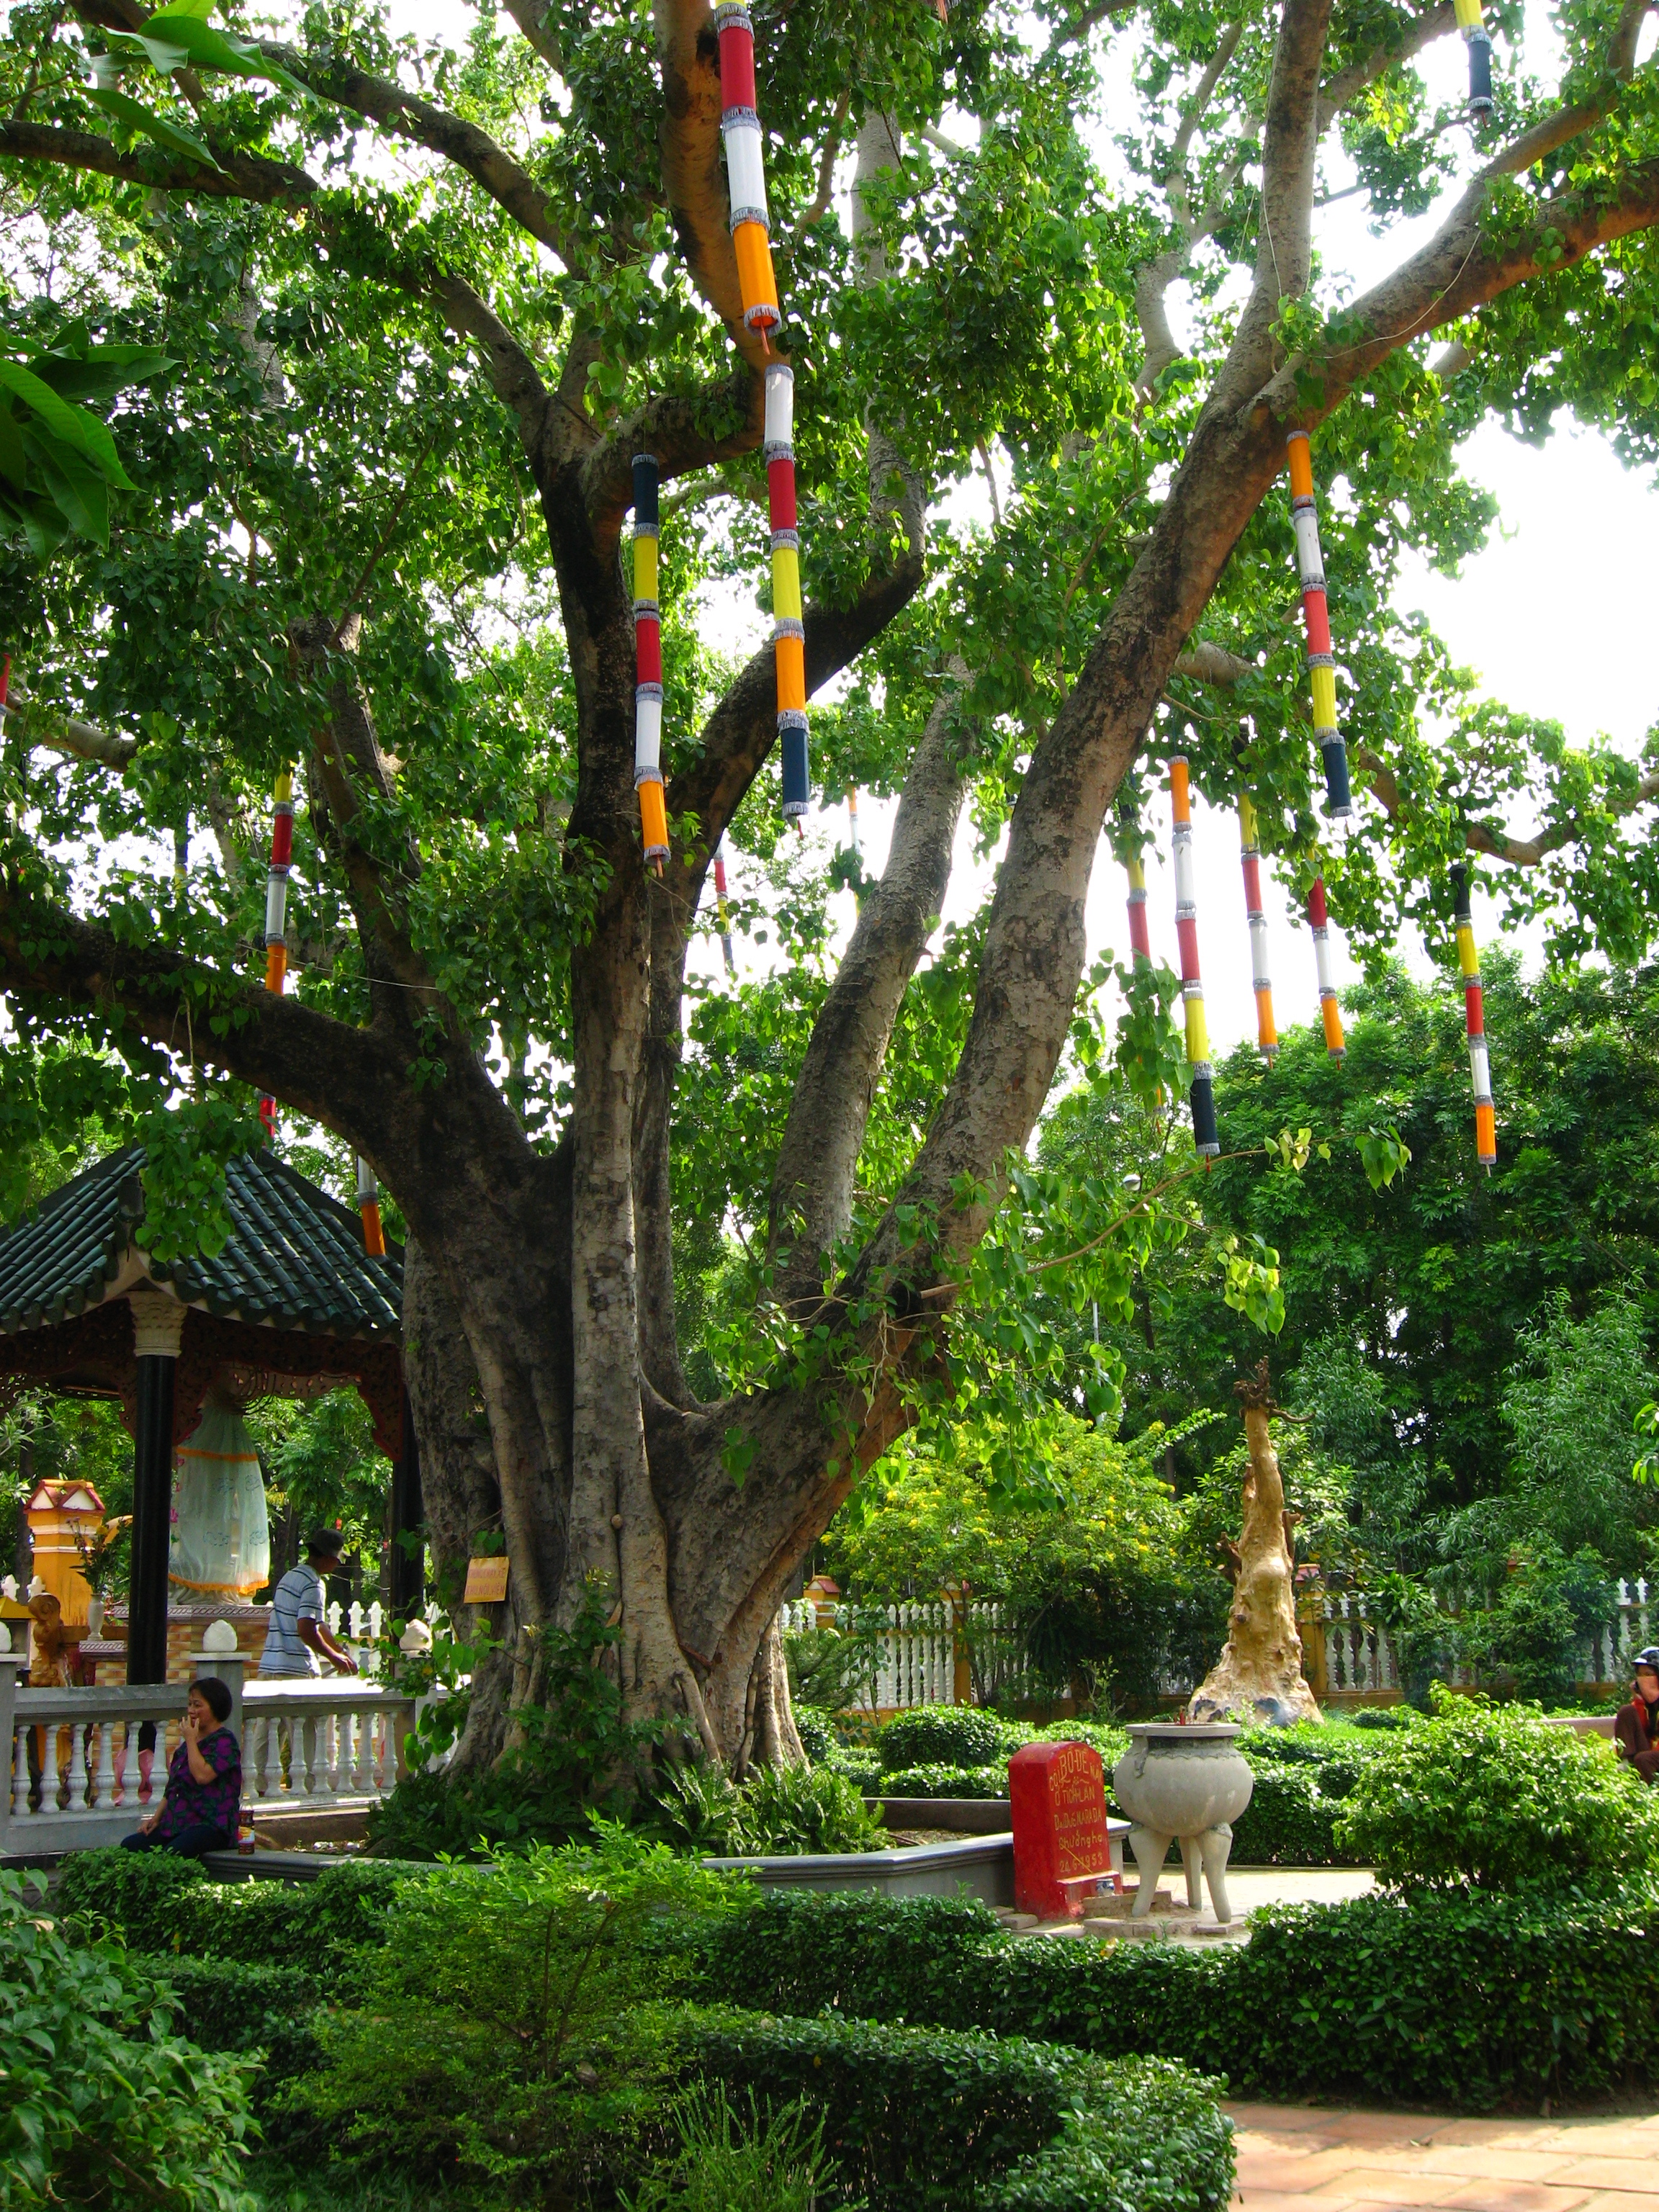 Bodhi Tree Images